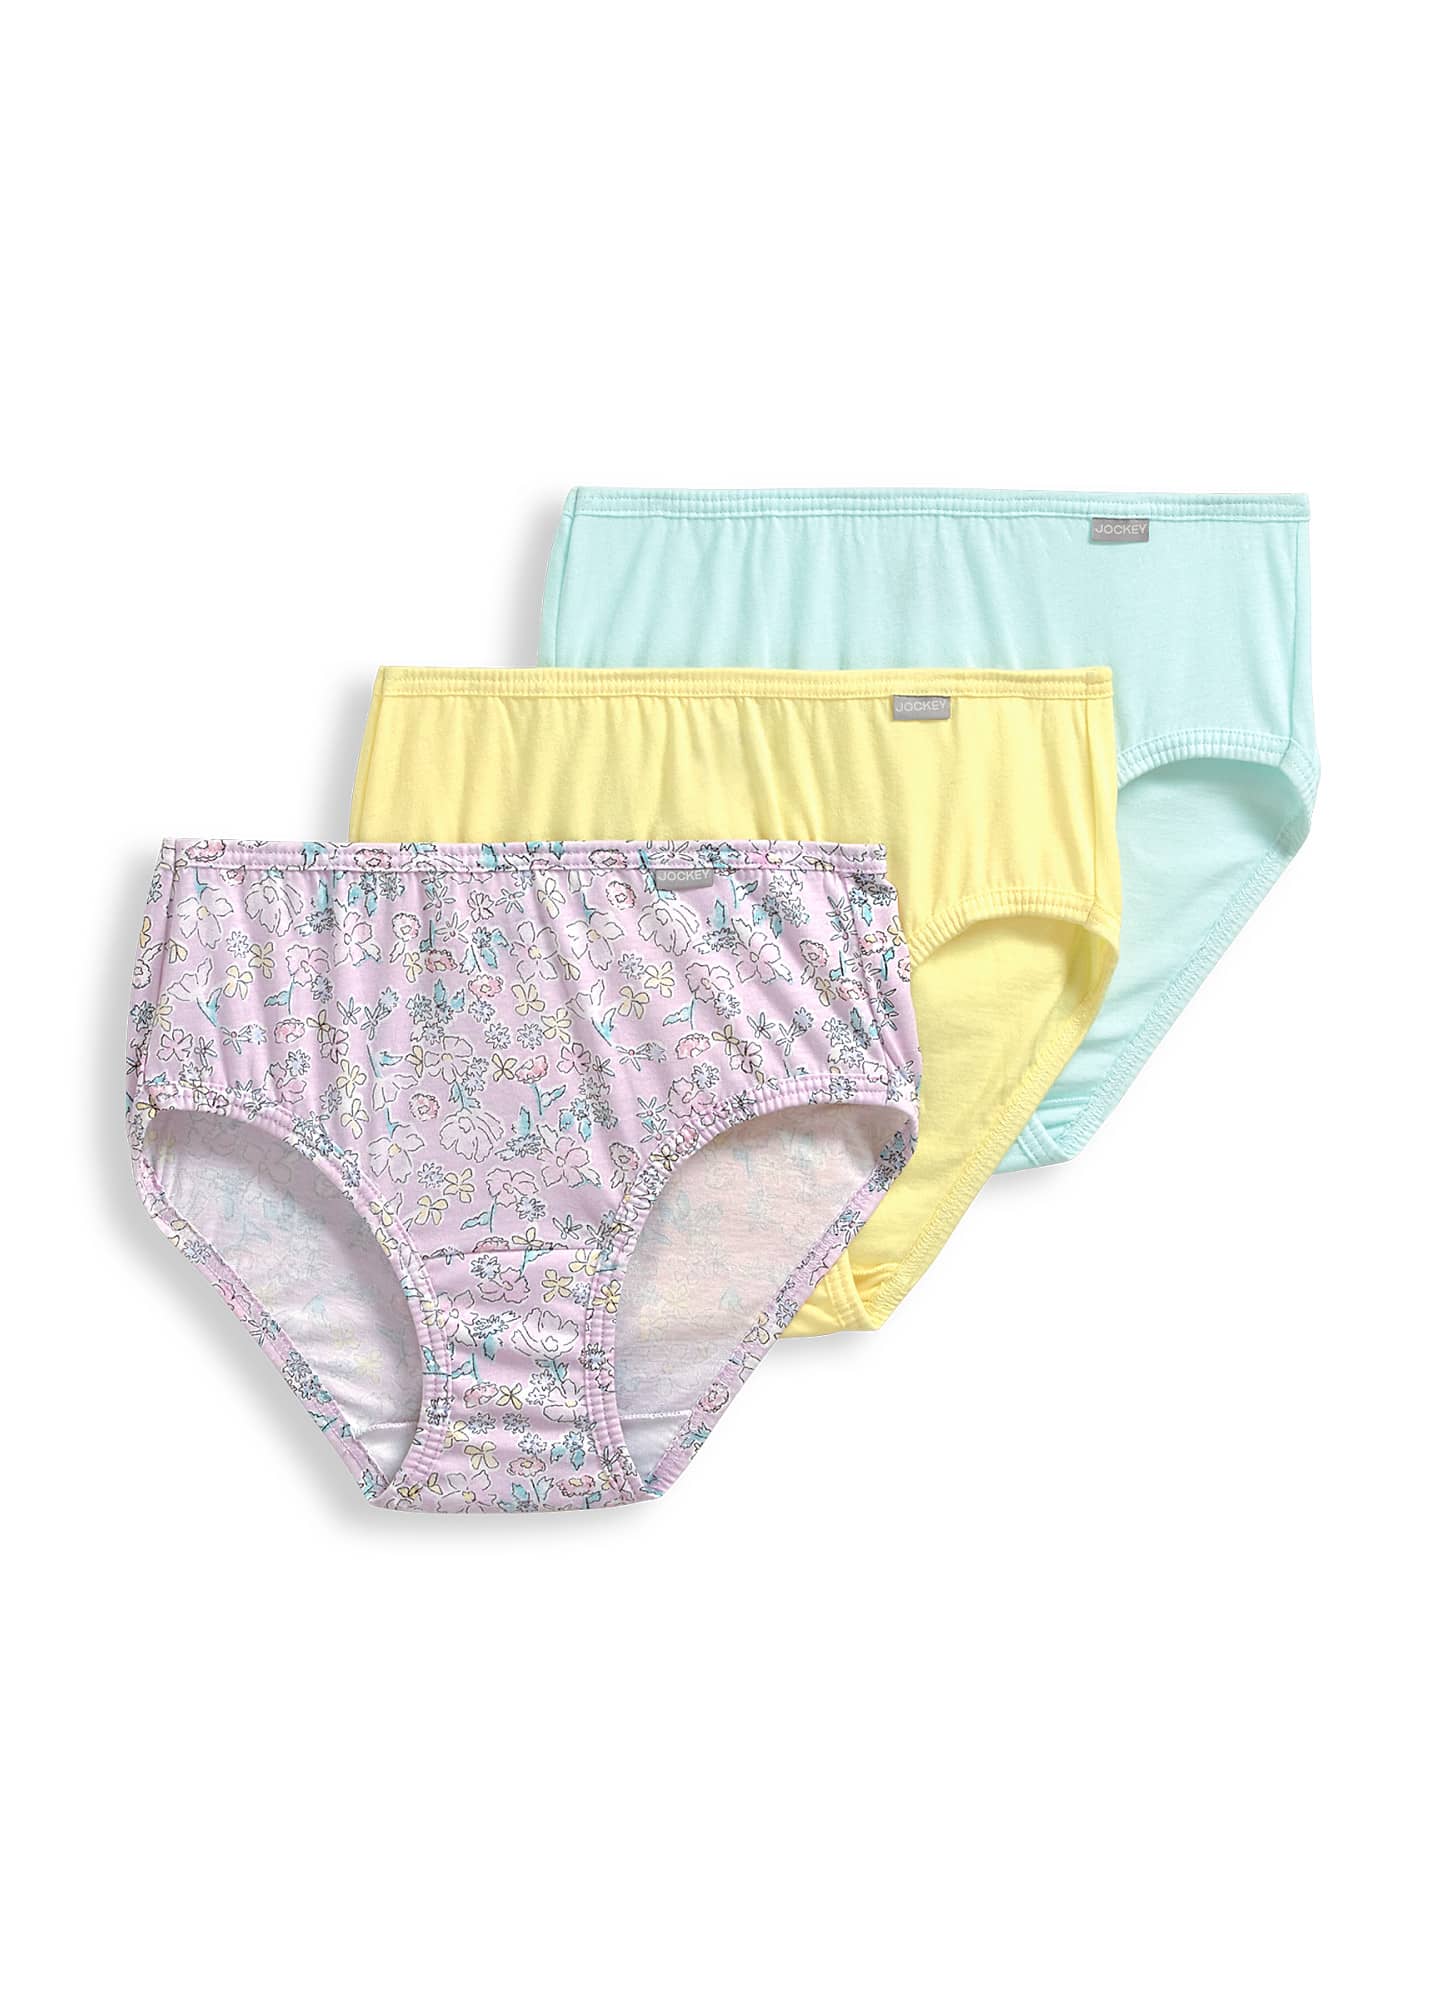 G2 Jockey Panties Women's Underwear Elance Sz 5 HIPSTERS Style 1488 for ...